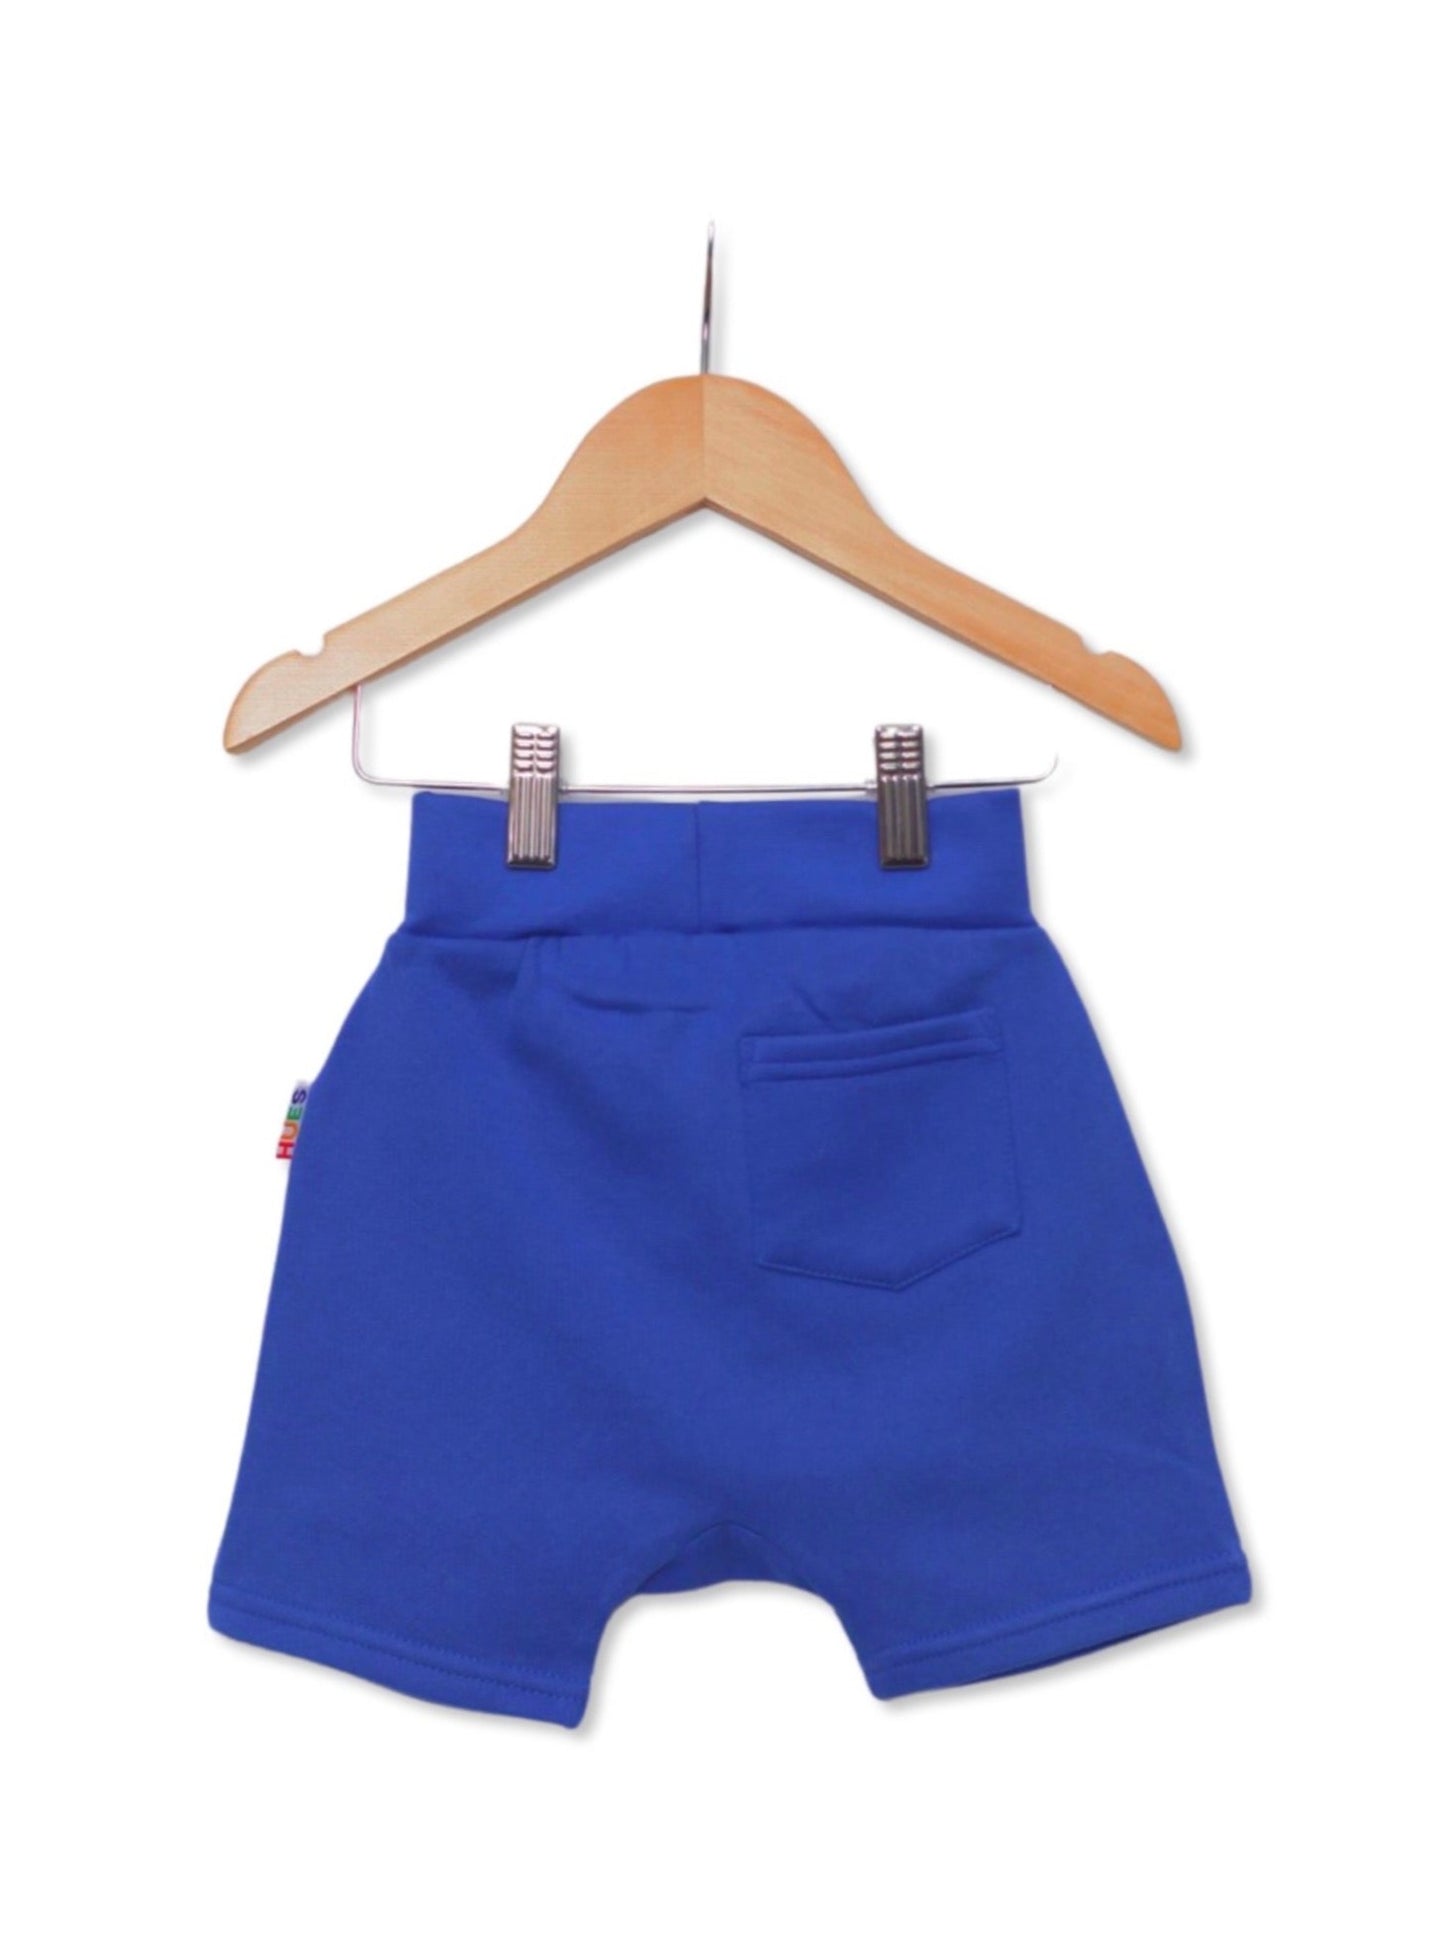 Kids Unisex Blue Shorts Back View - Hues Clothing